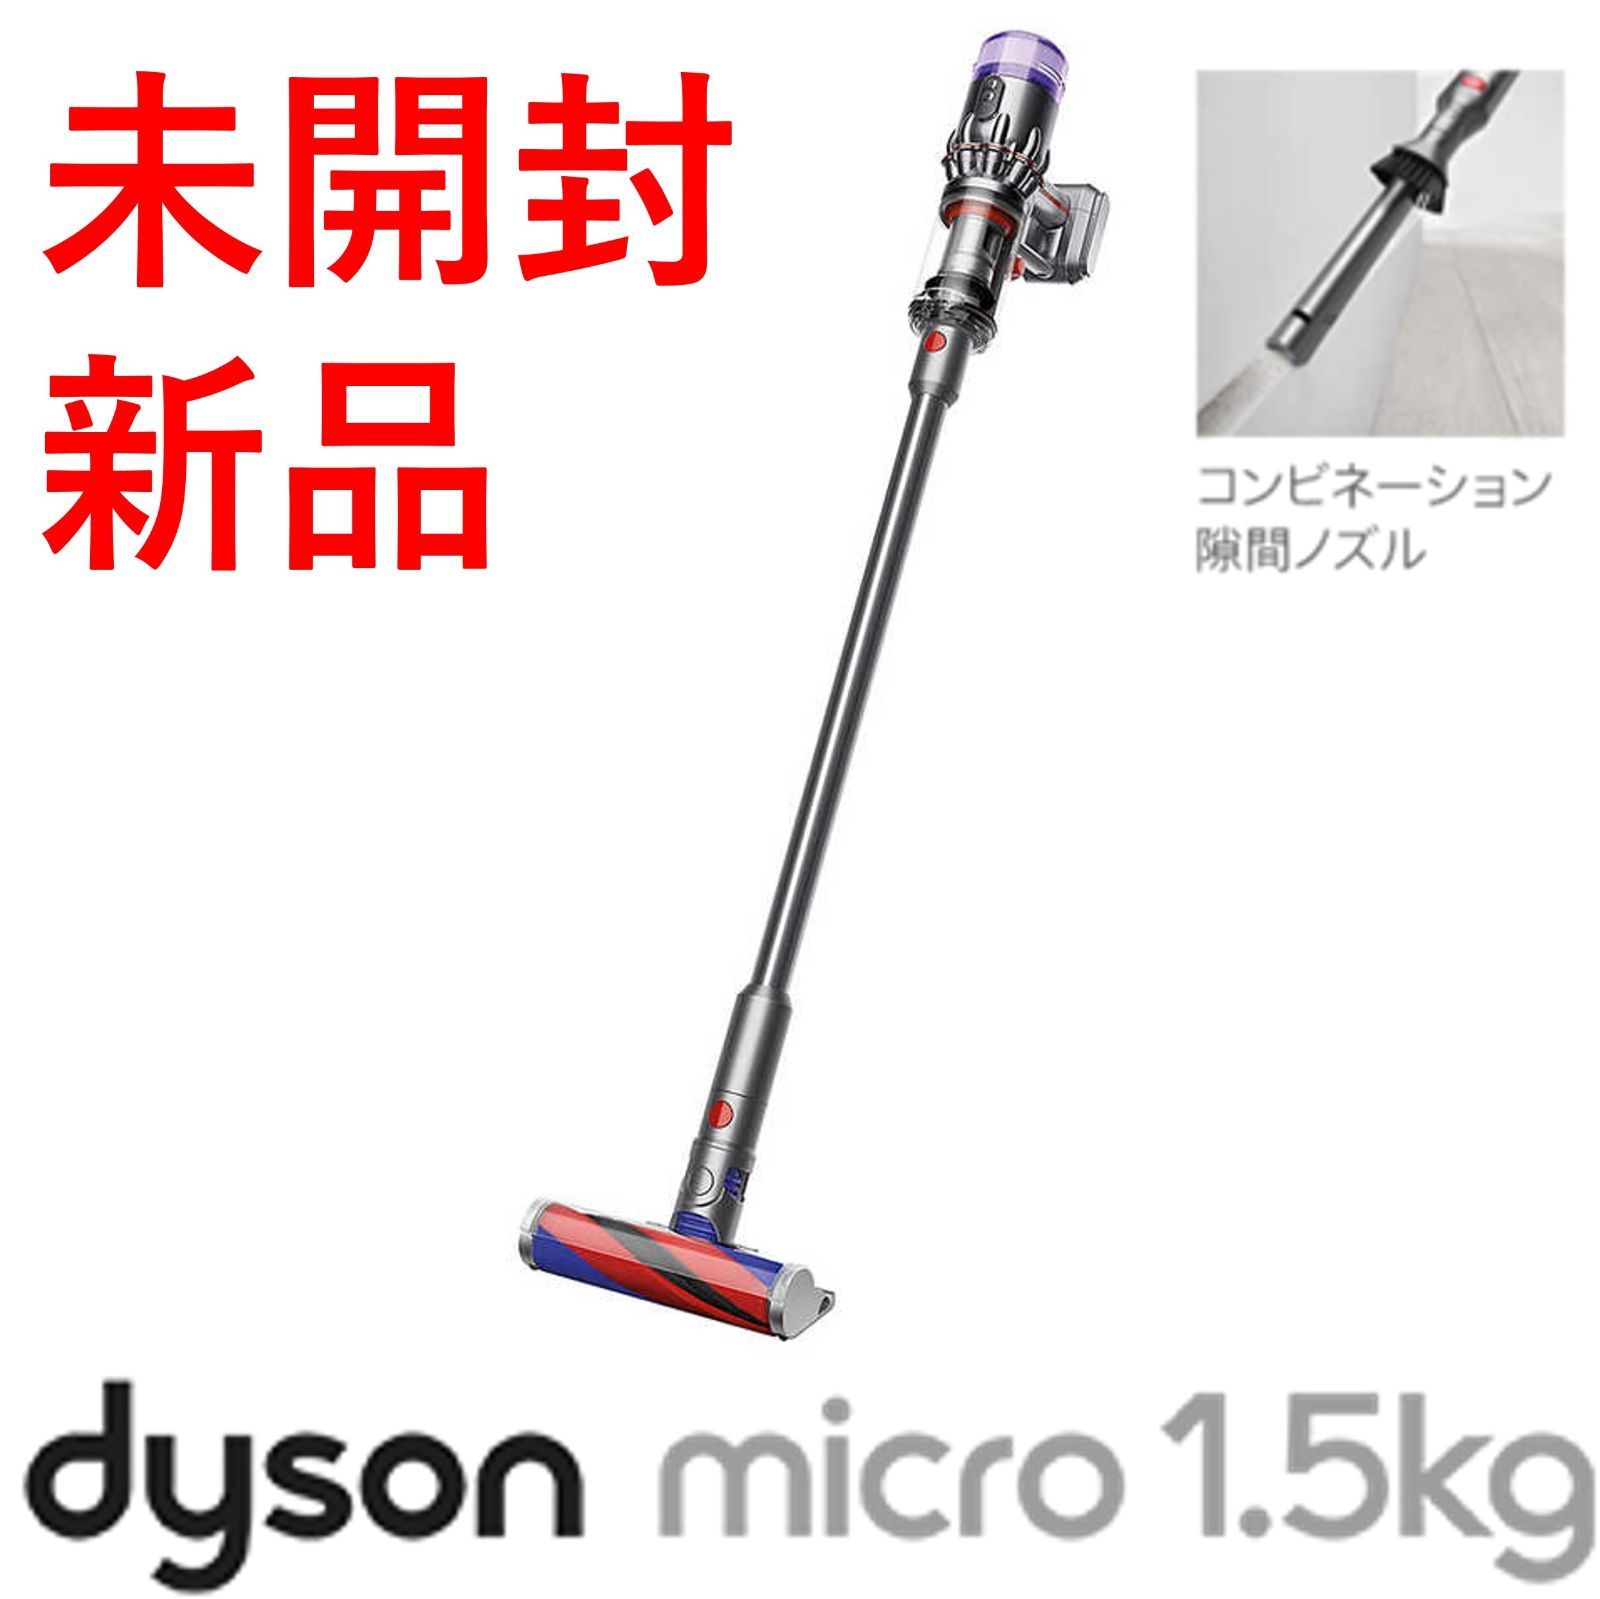 Dyson Micro 1.5kg Origin SV21 コードレス - 掃除機